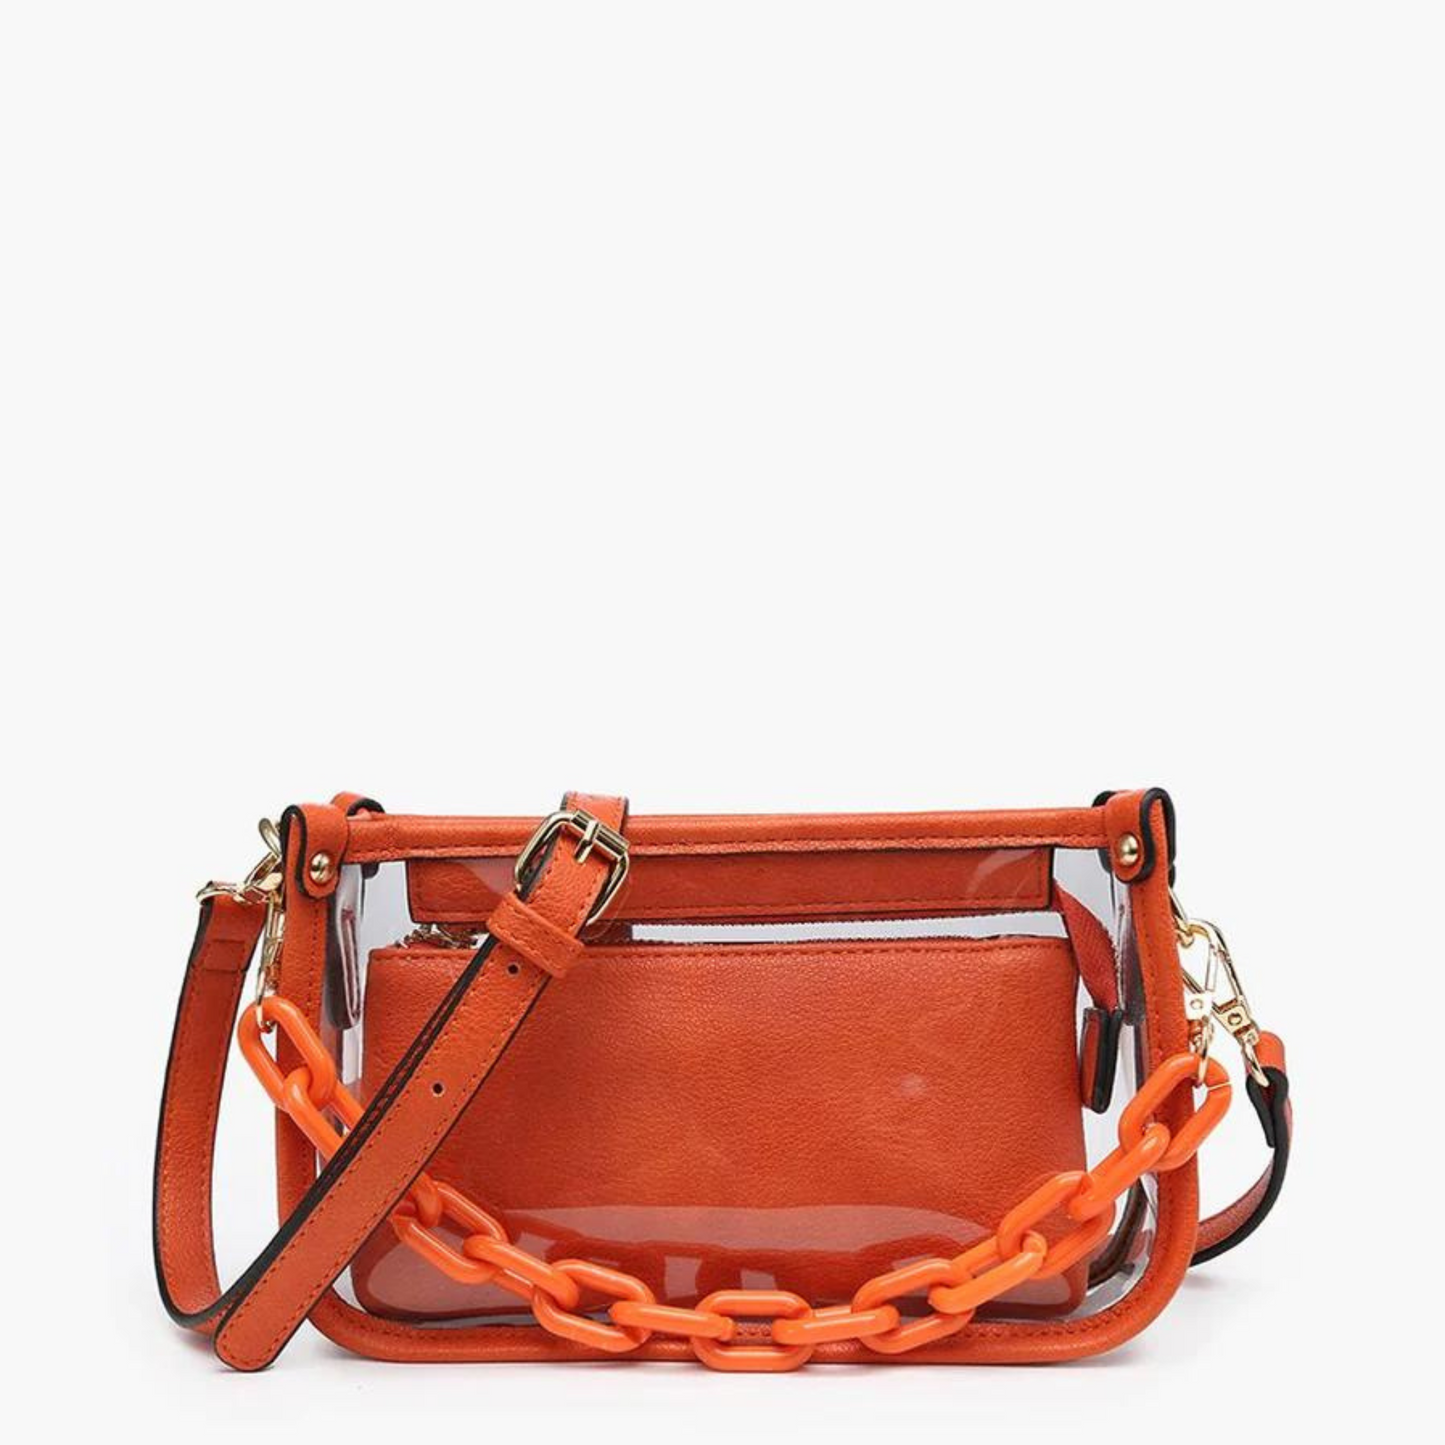 Jessica Clear crossbody purse in orange